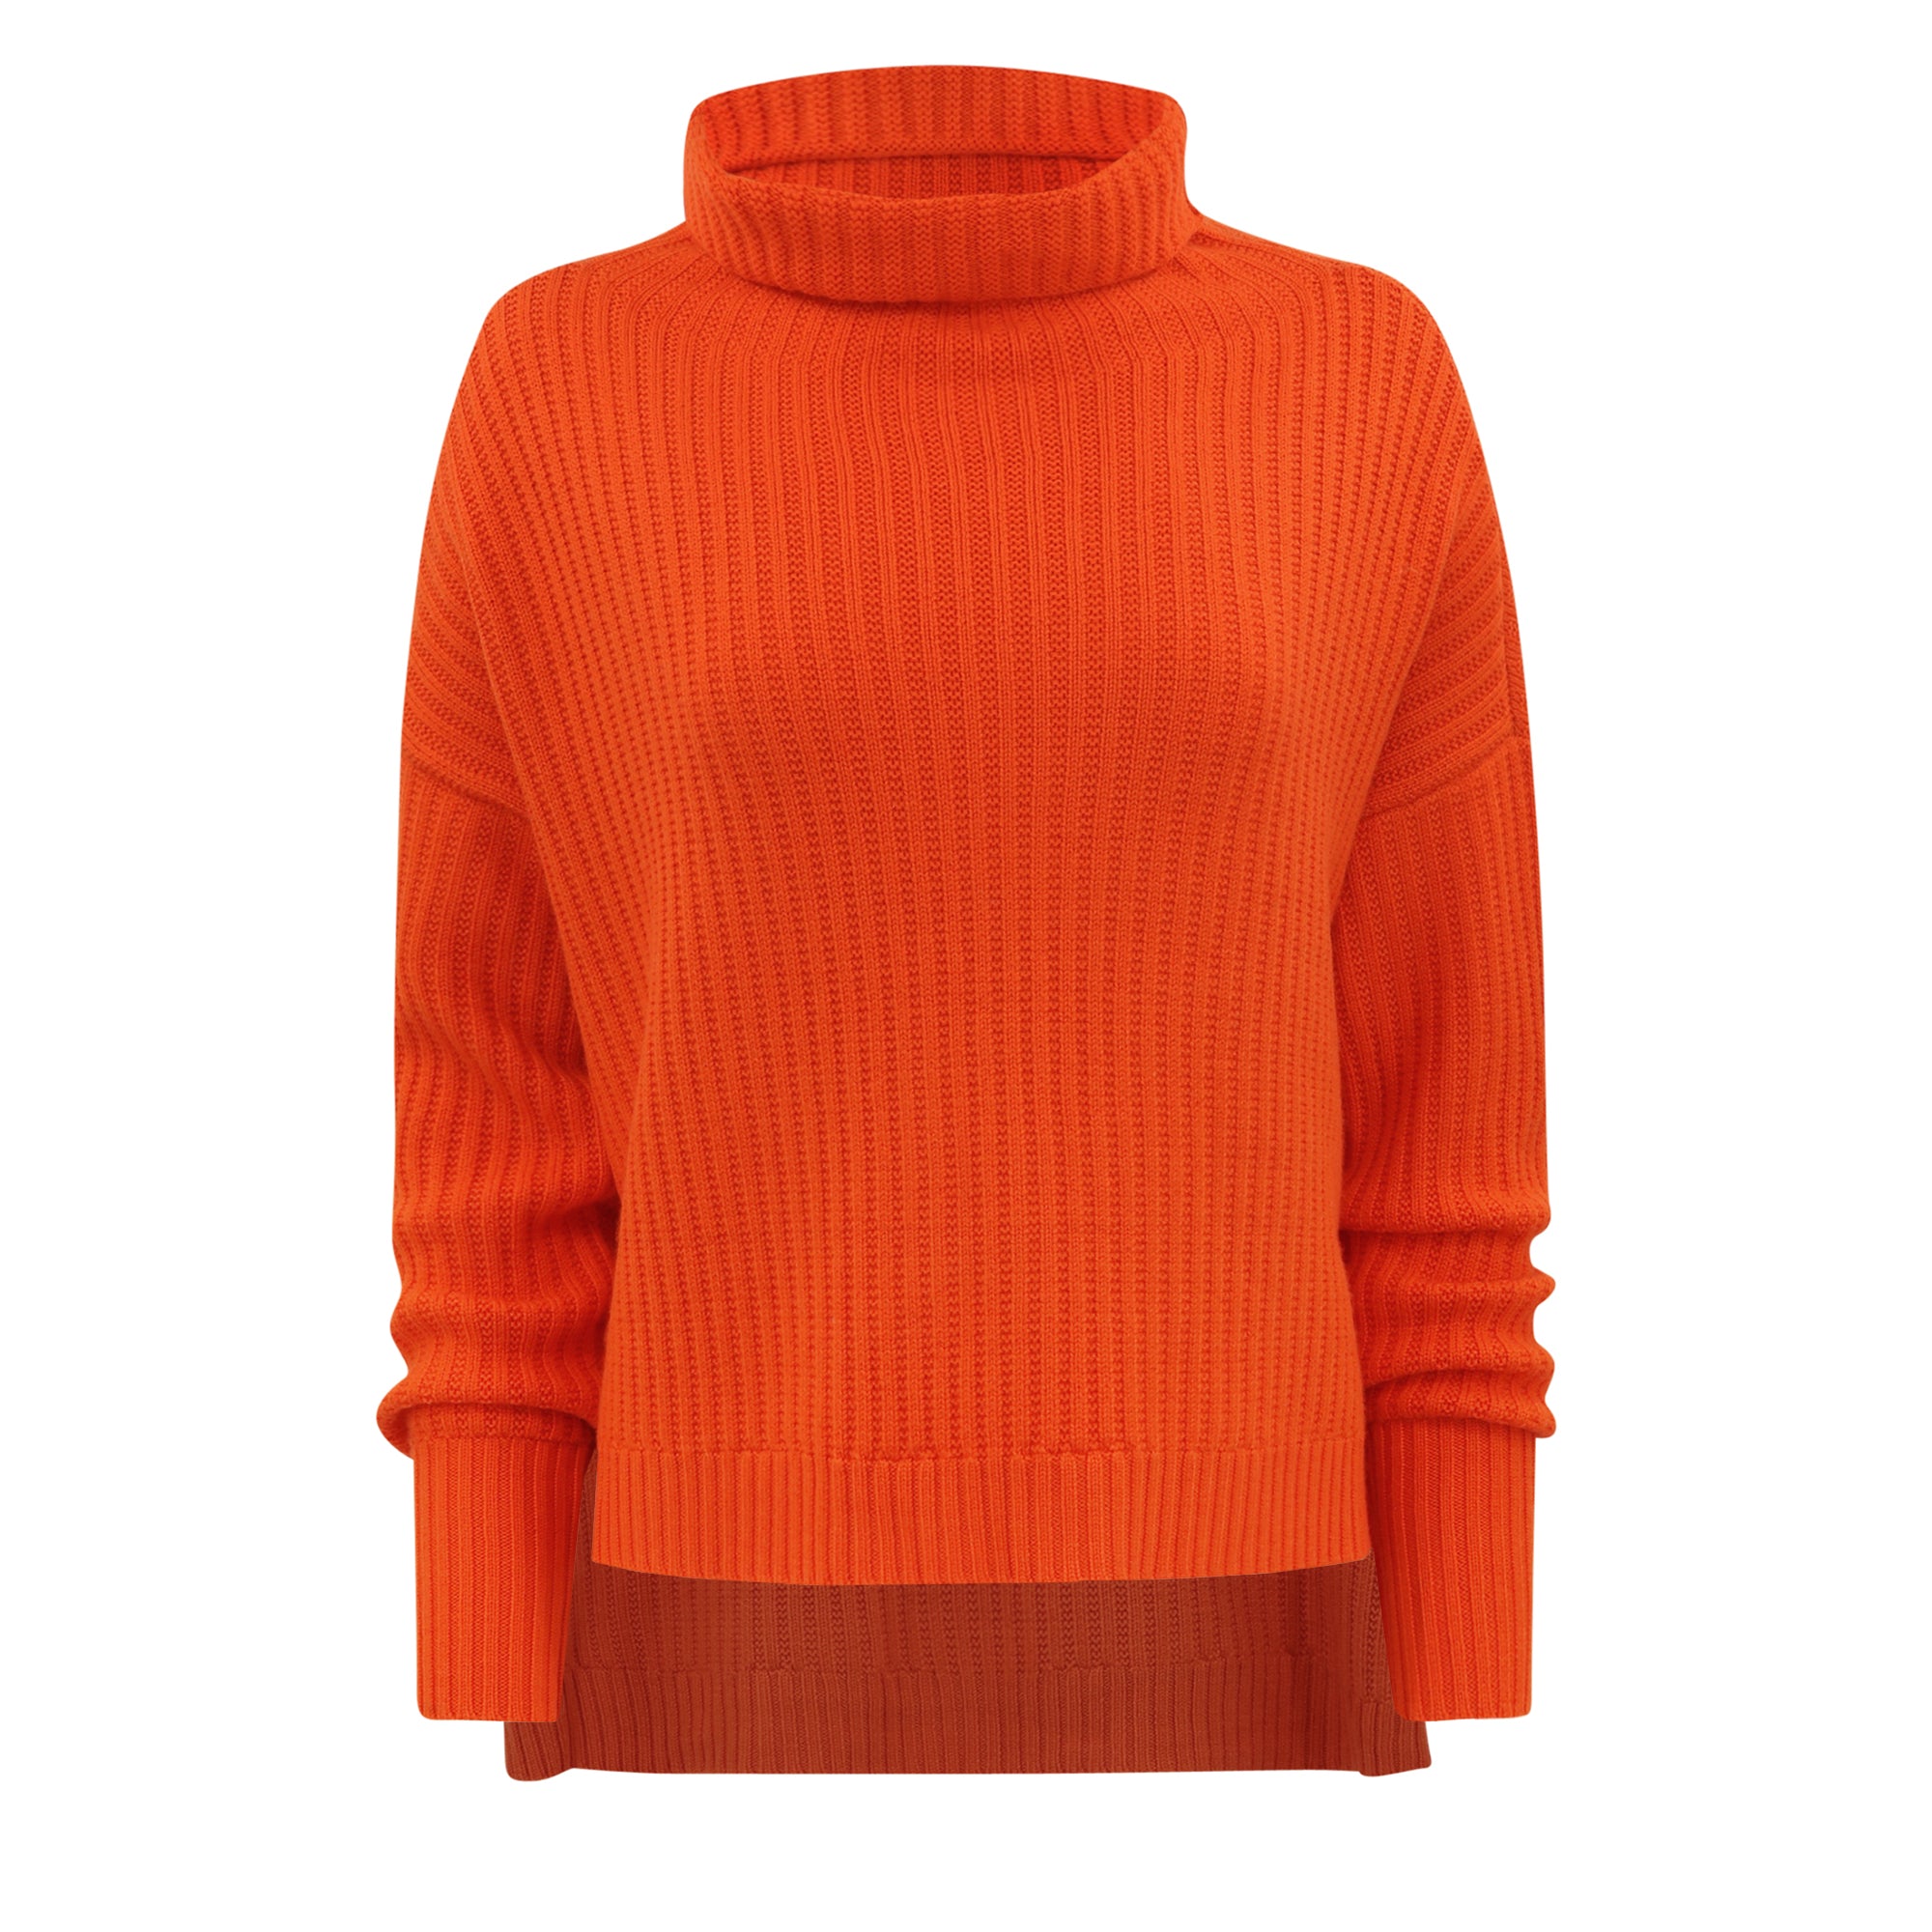 Everly Sweater - Orange